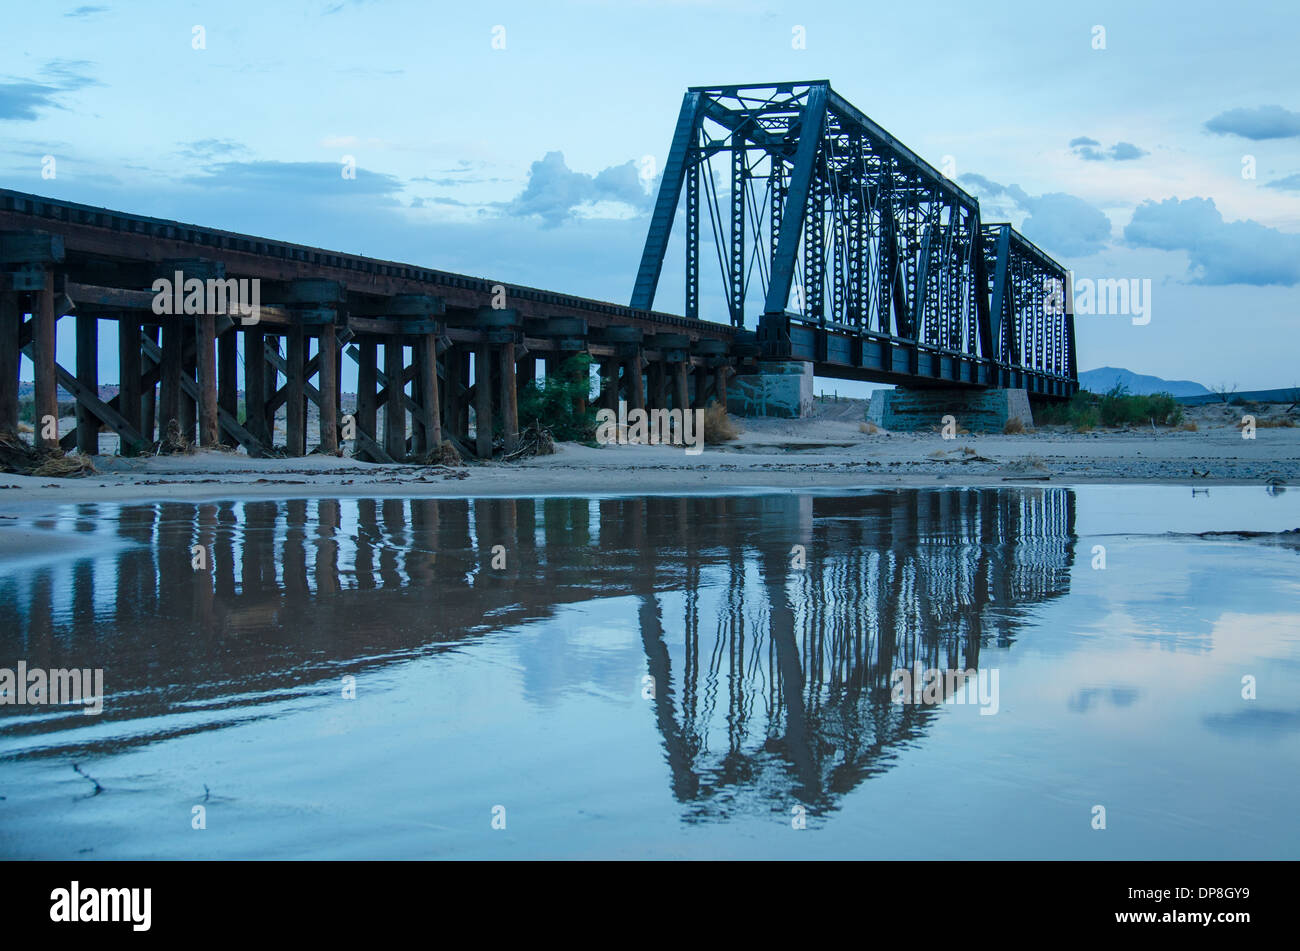 Railroad bridge over the Rio Salado, Sevilleta National Wildlife Refuge, Soccoro co., New Mexico, USA. Stock Photo